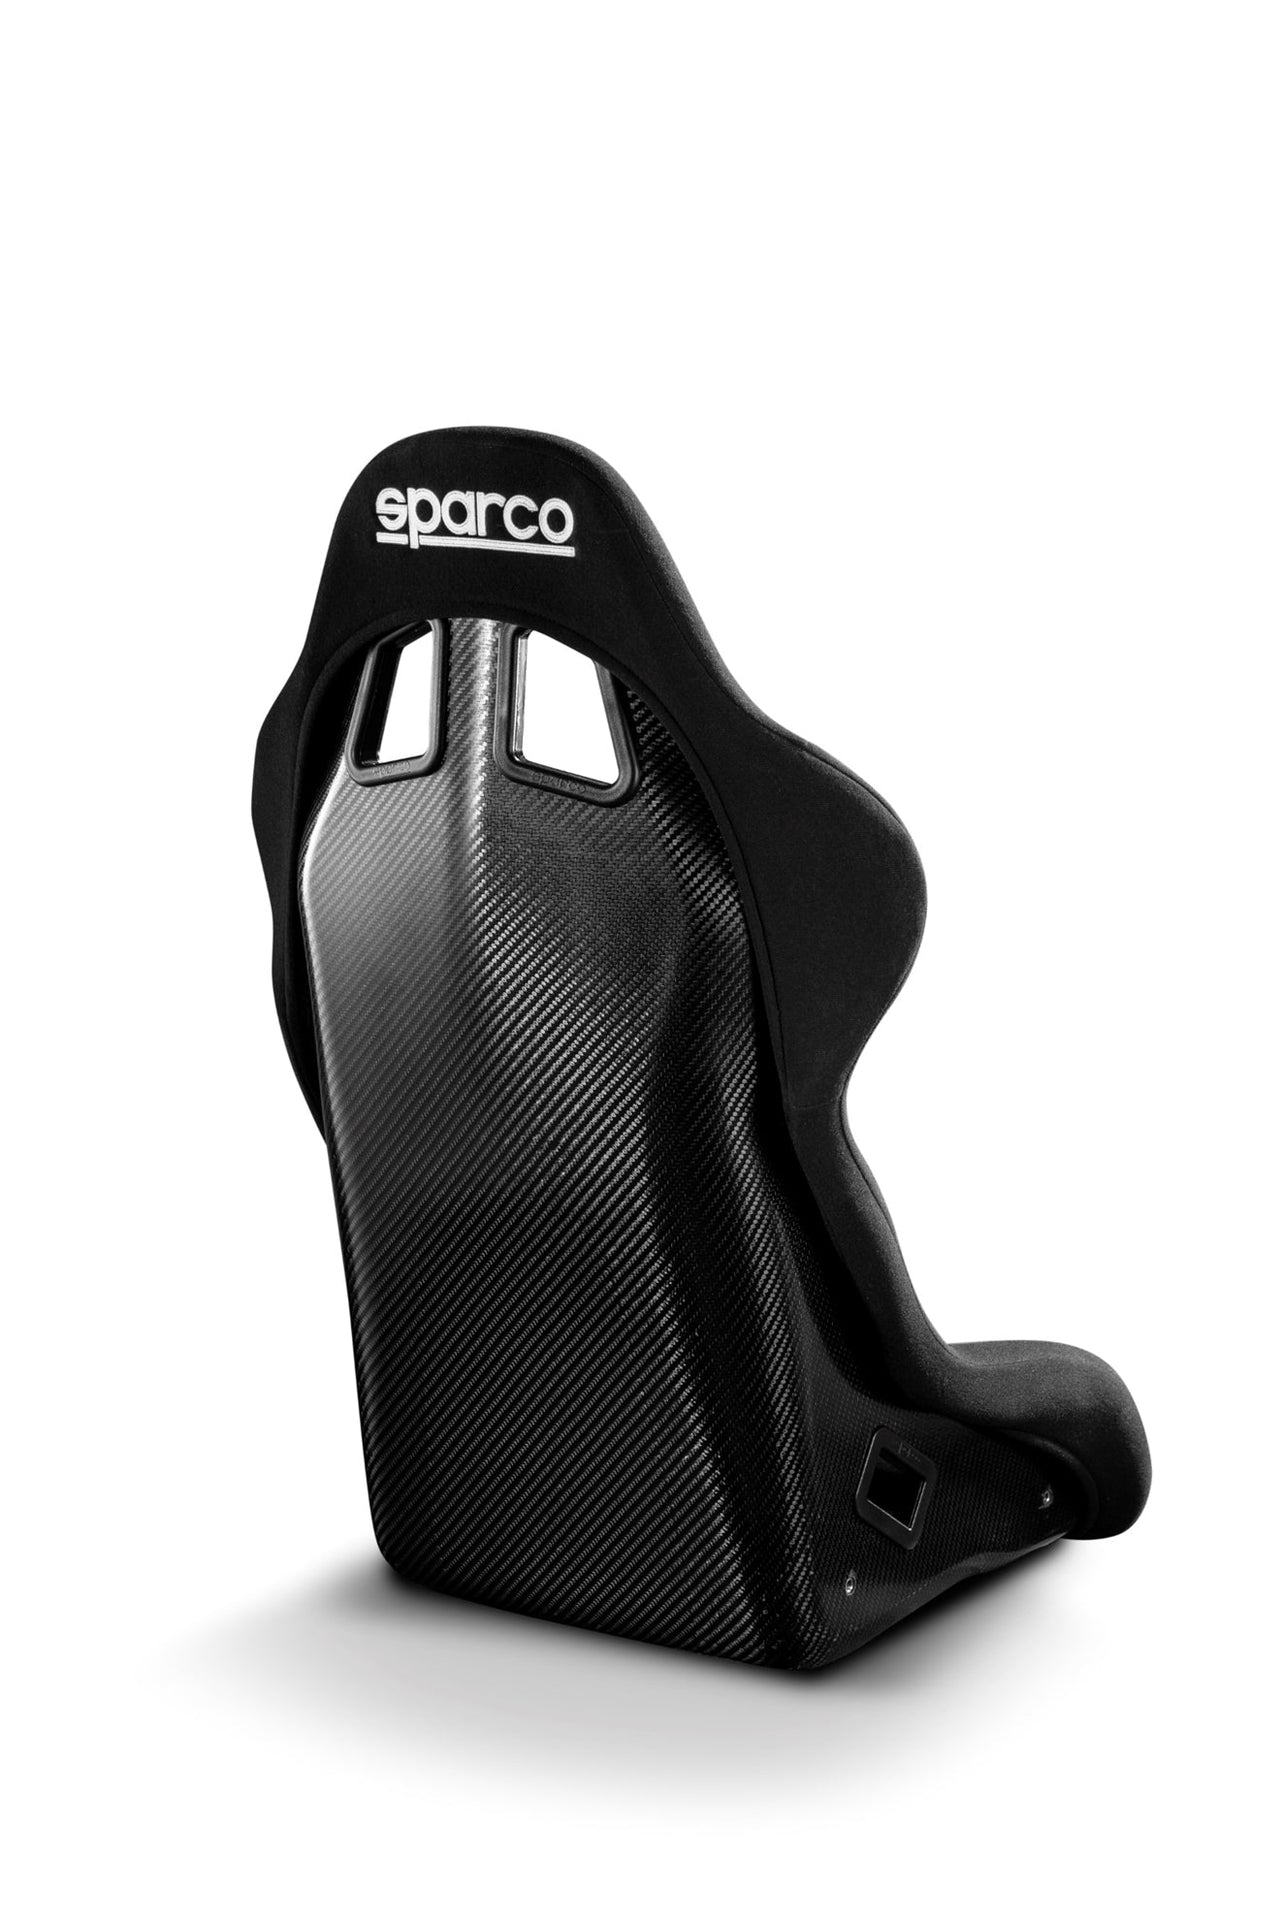 Sparco  Evo Carbon Fiber Race Seat back